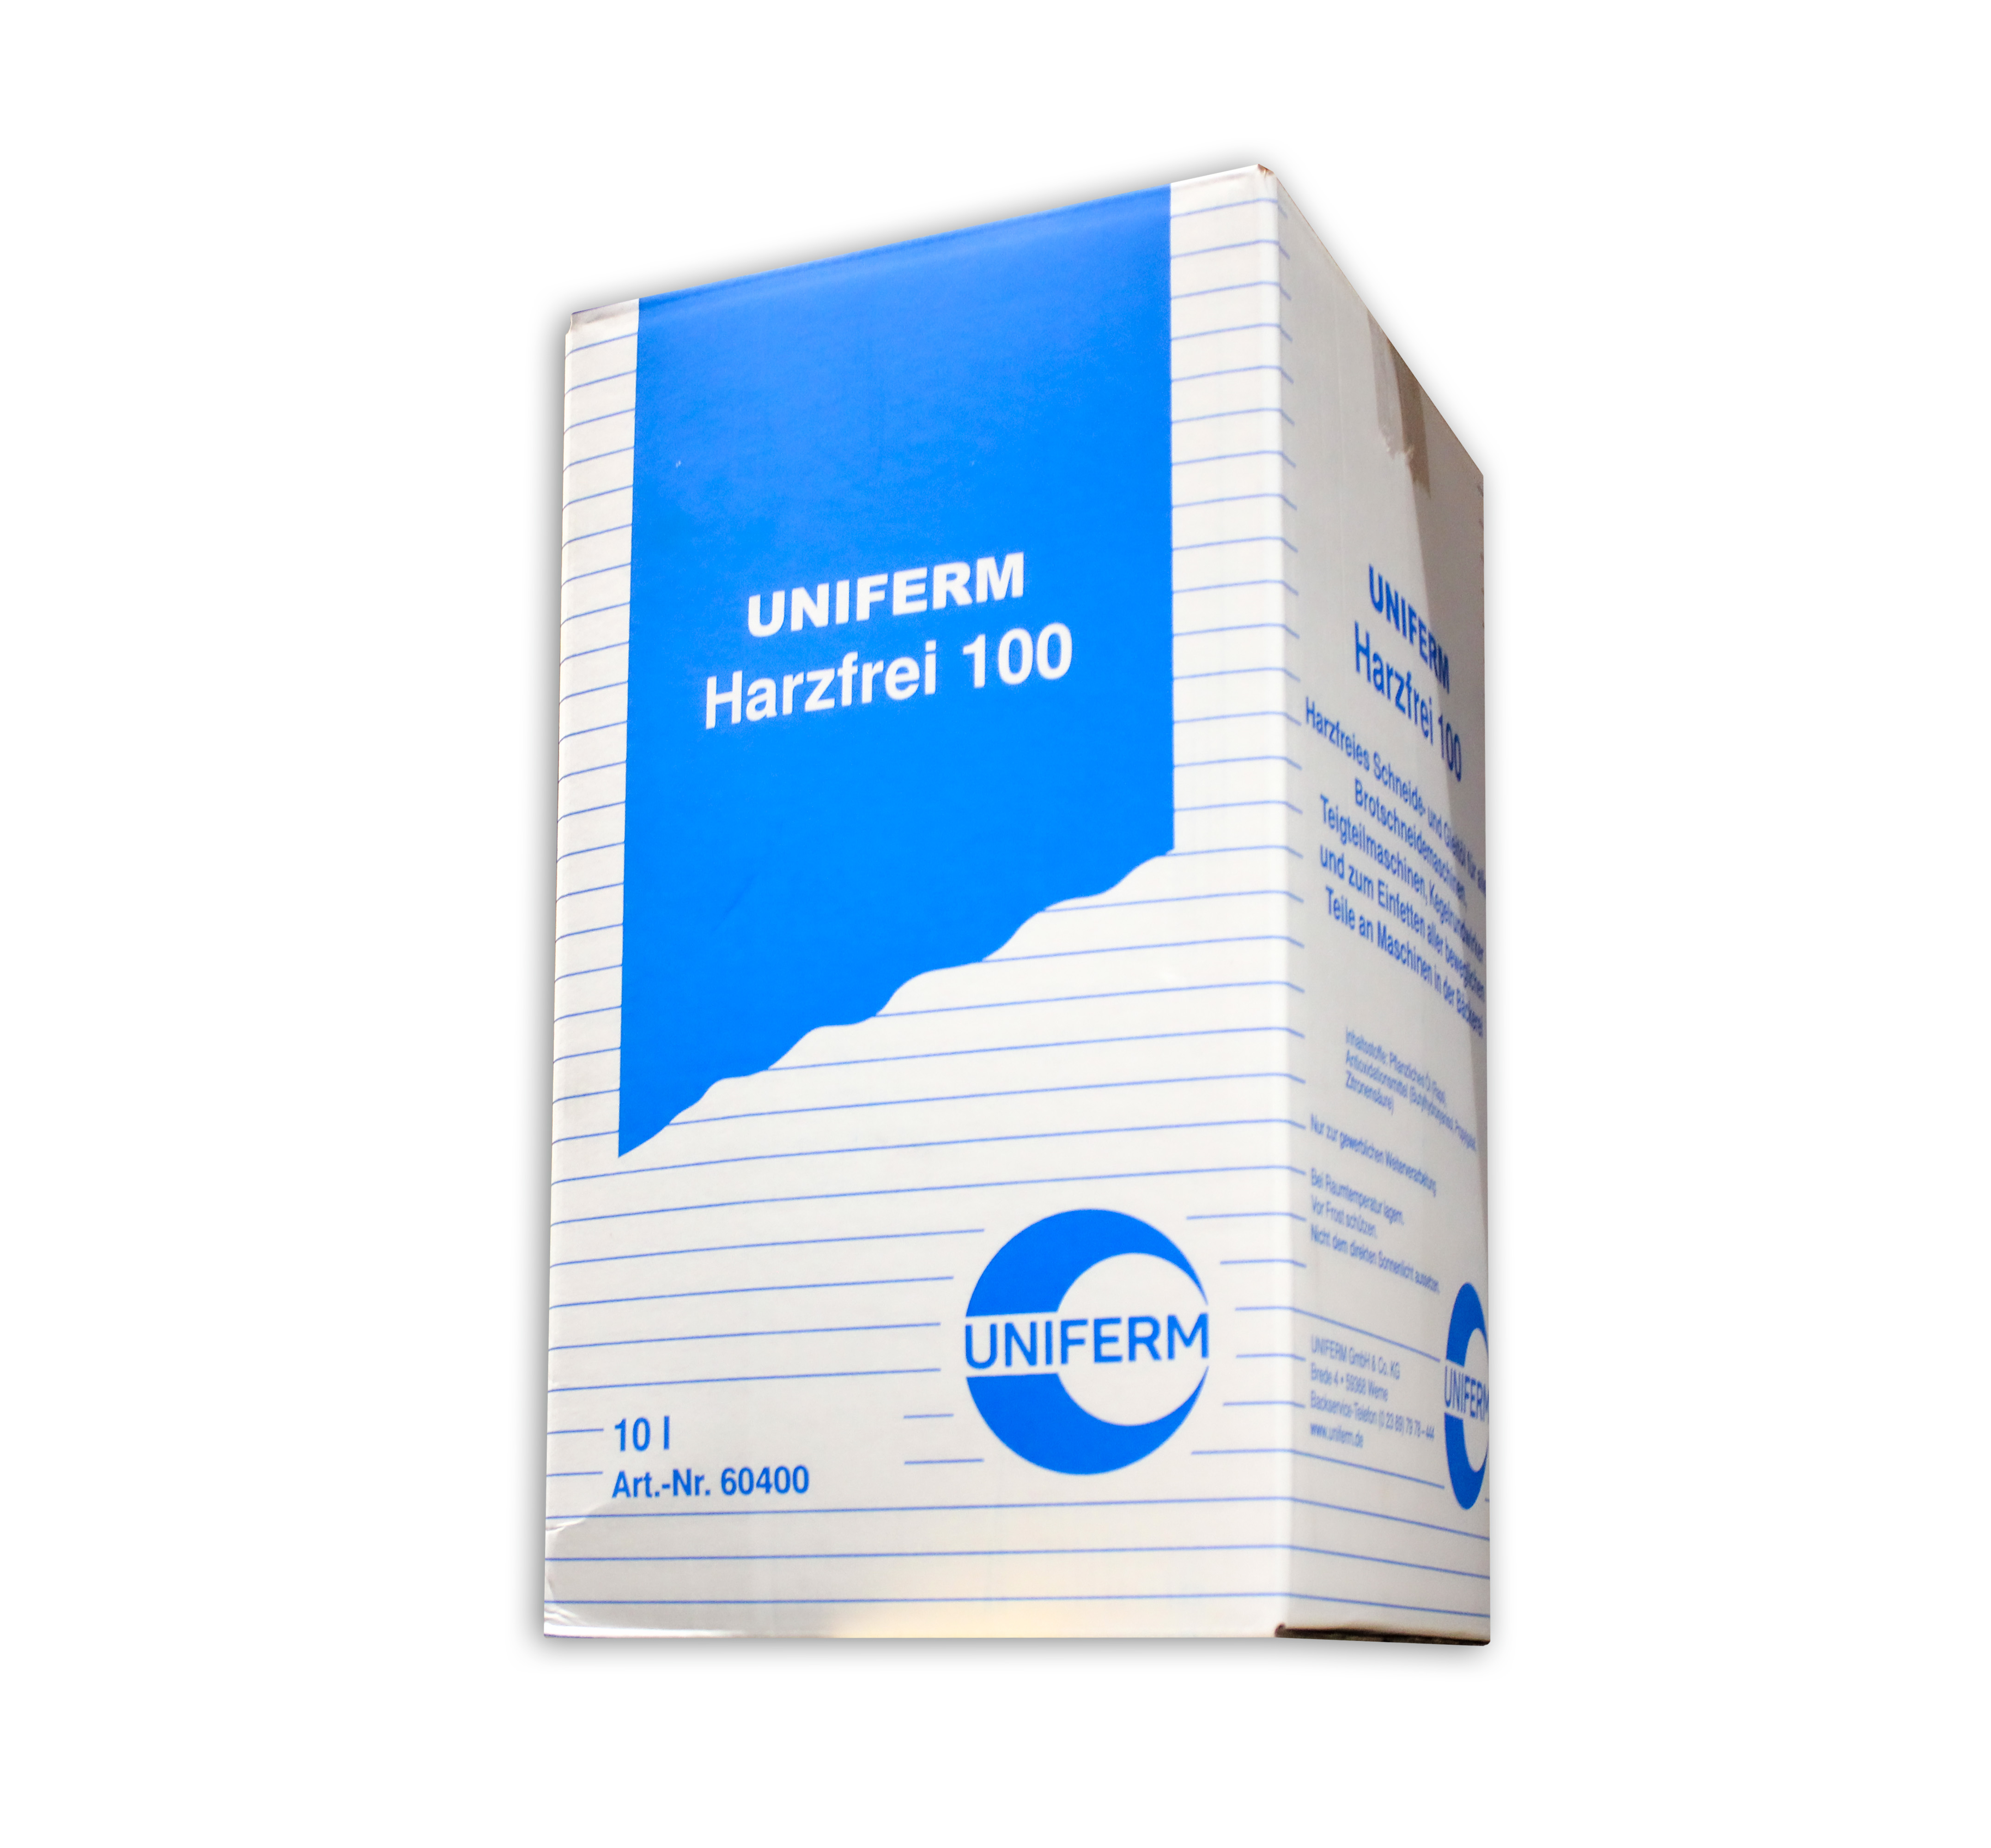 Uniferm Harzfrei 100 Bag in Box 10l